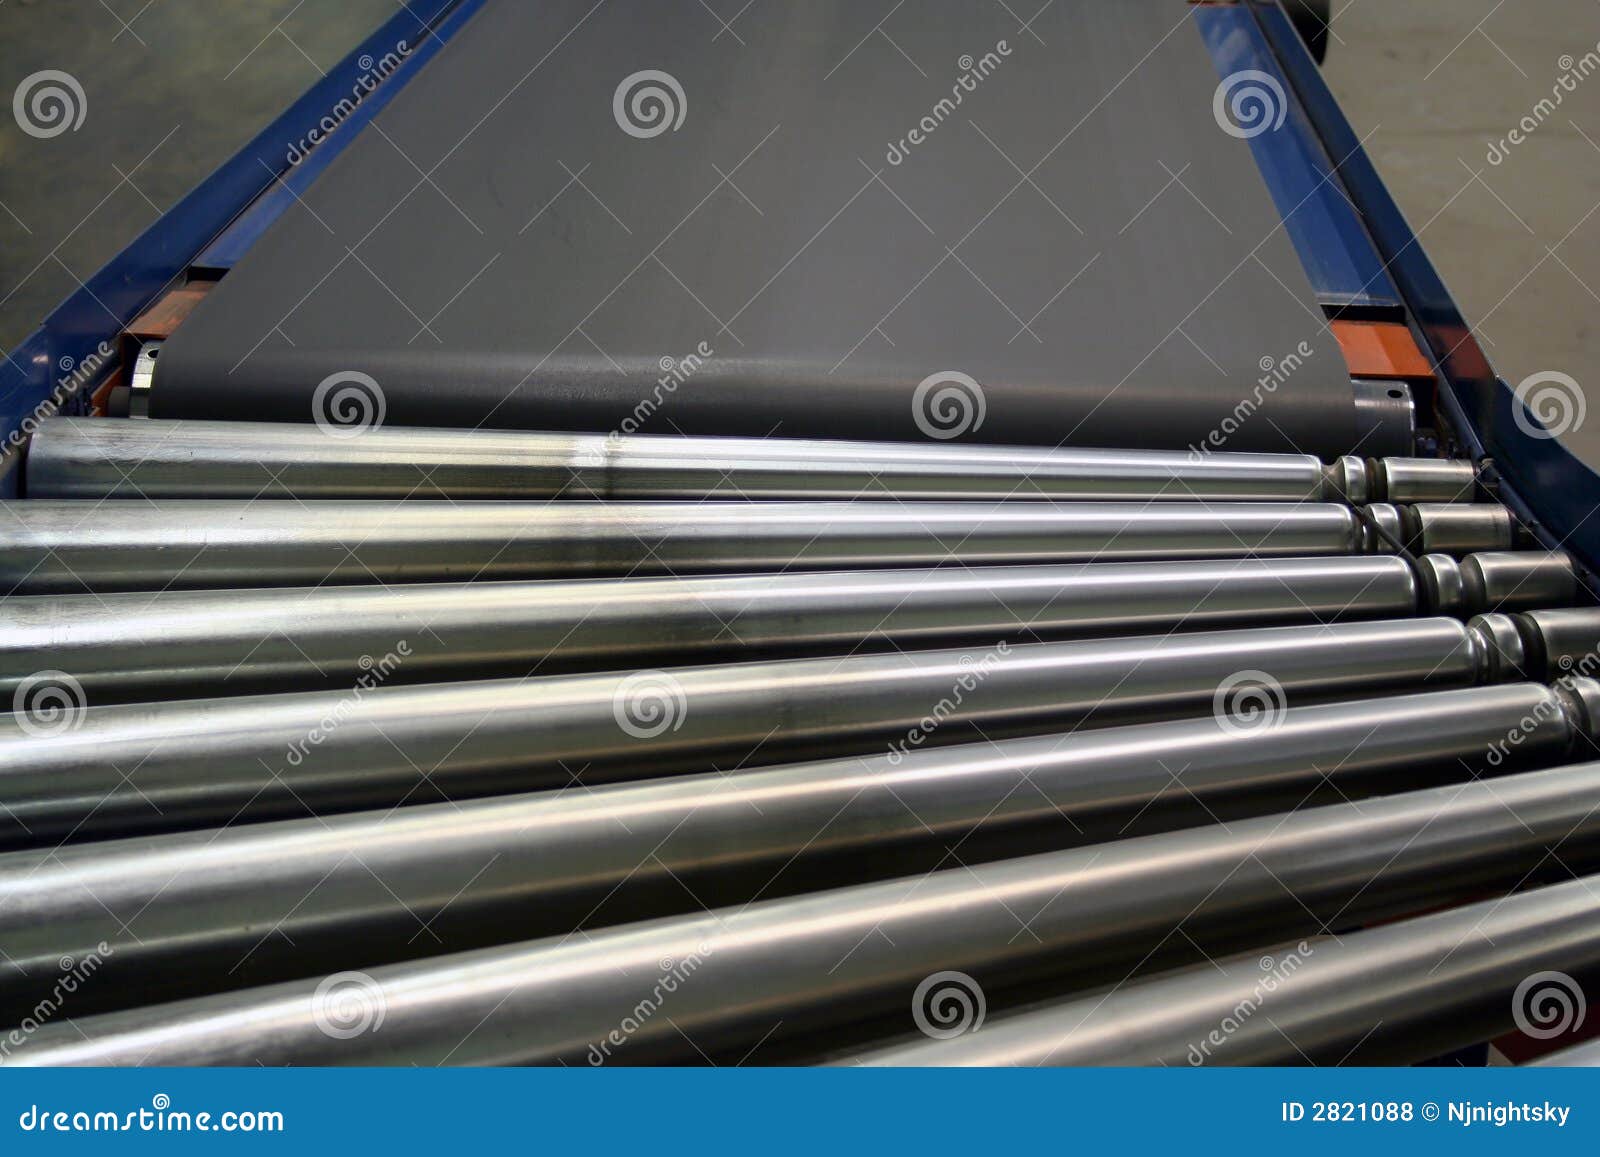 conveyor rollers and belt